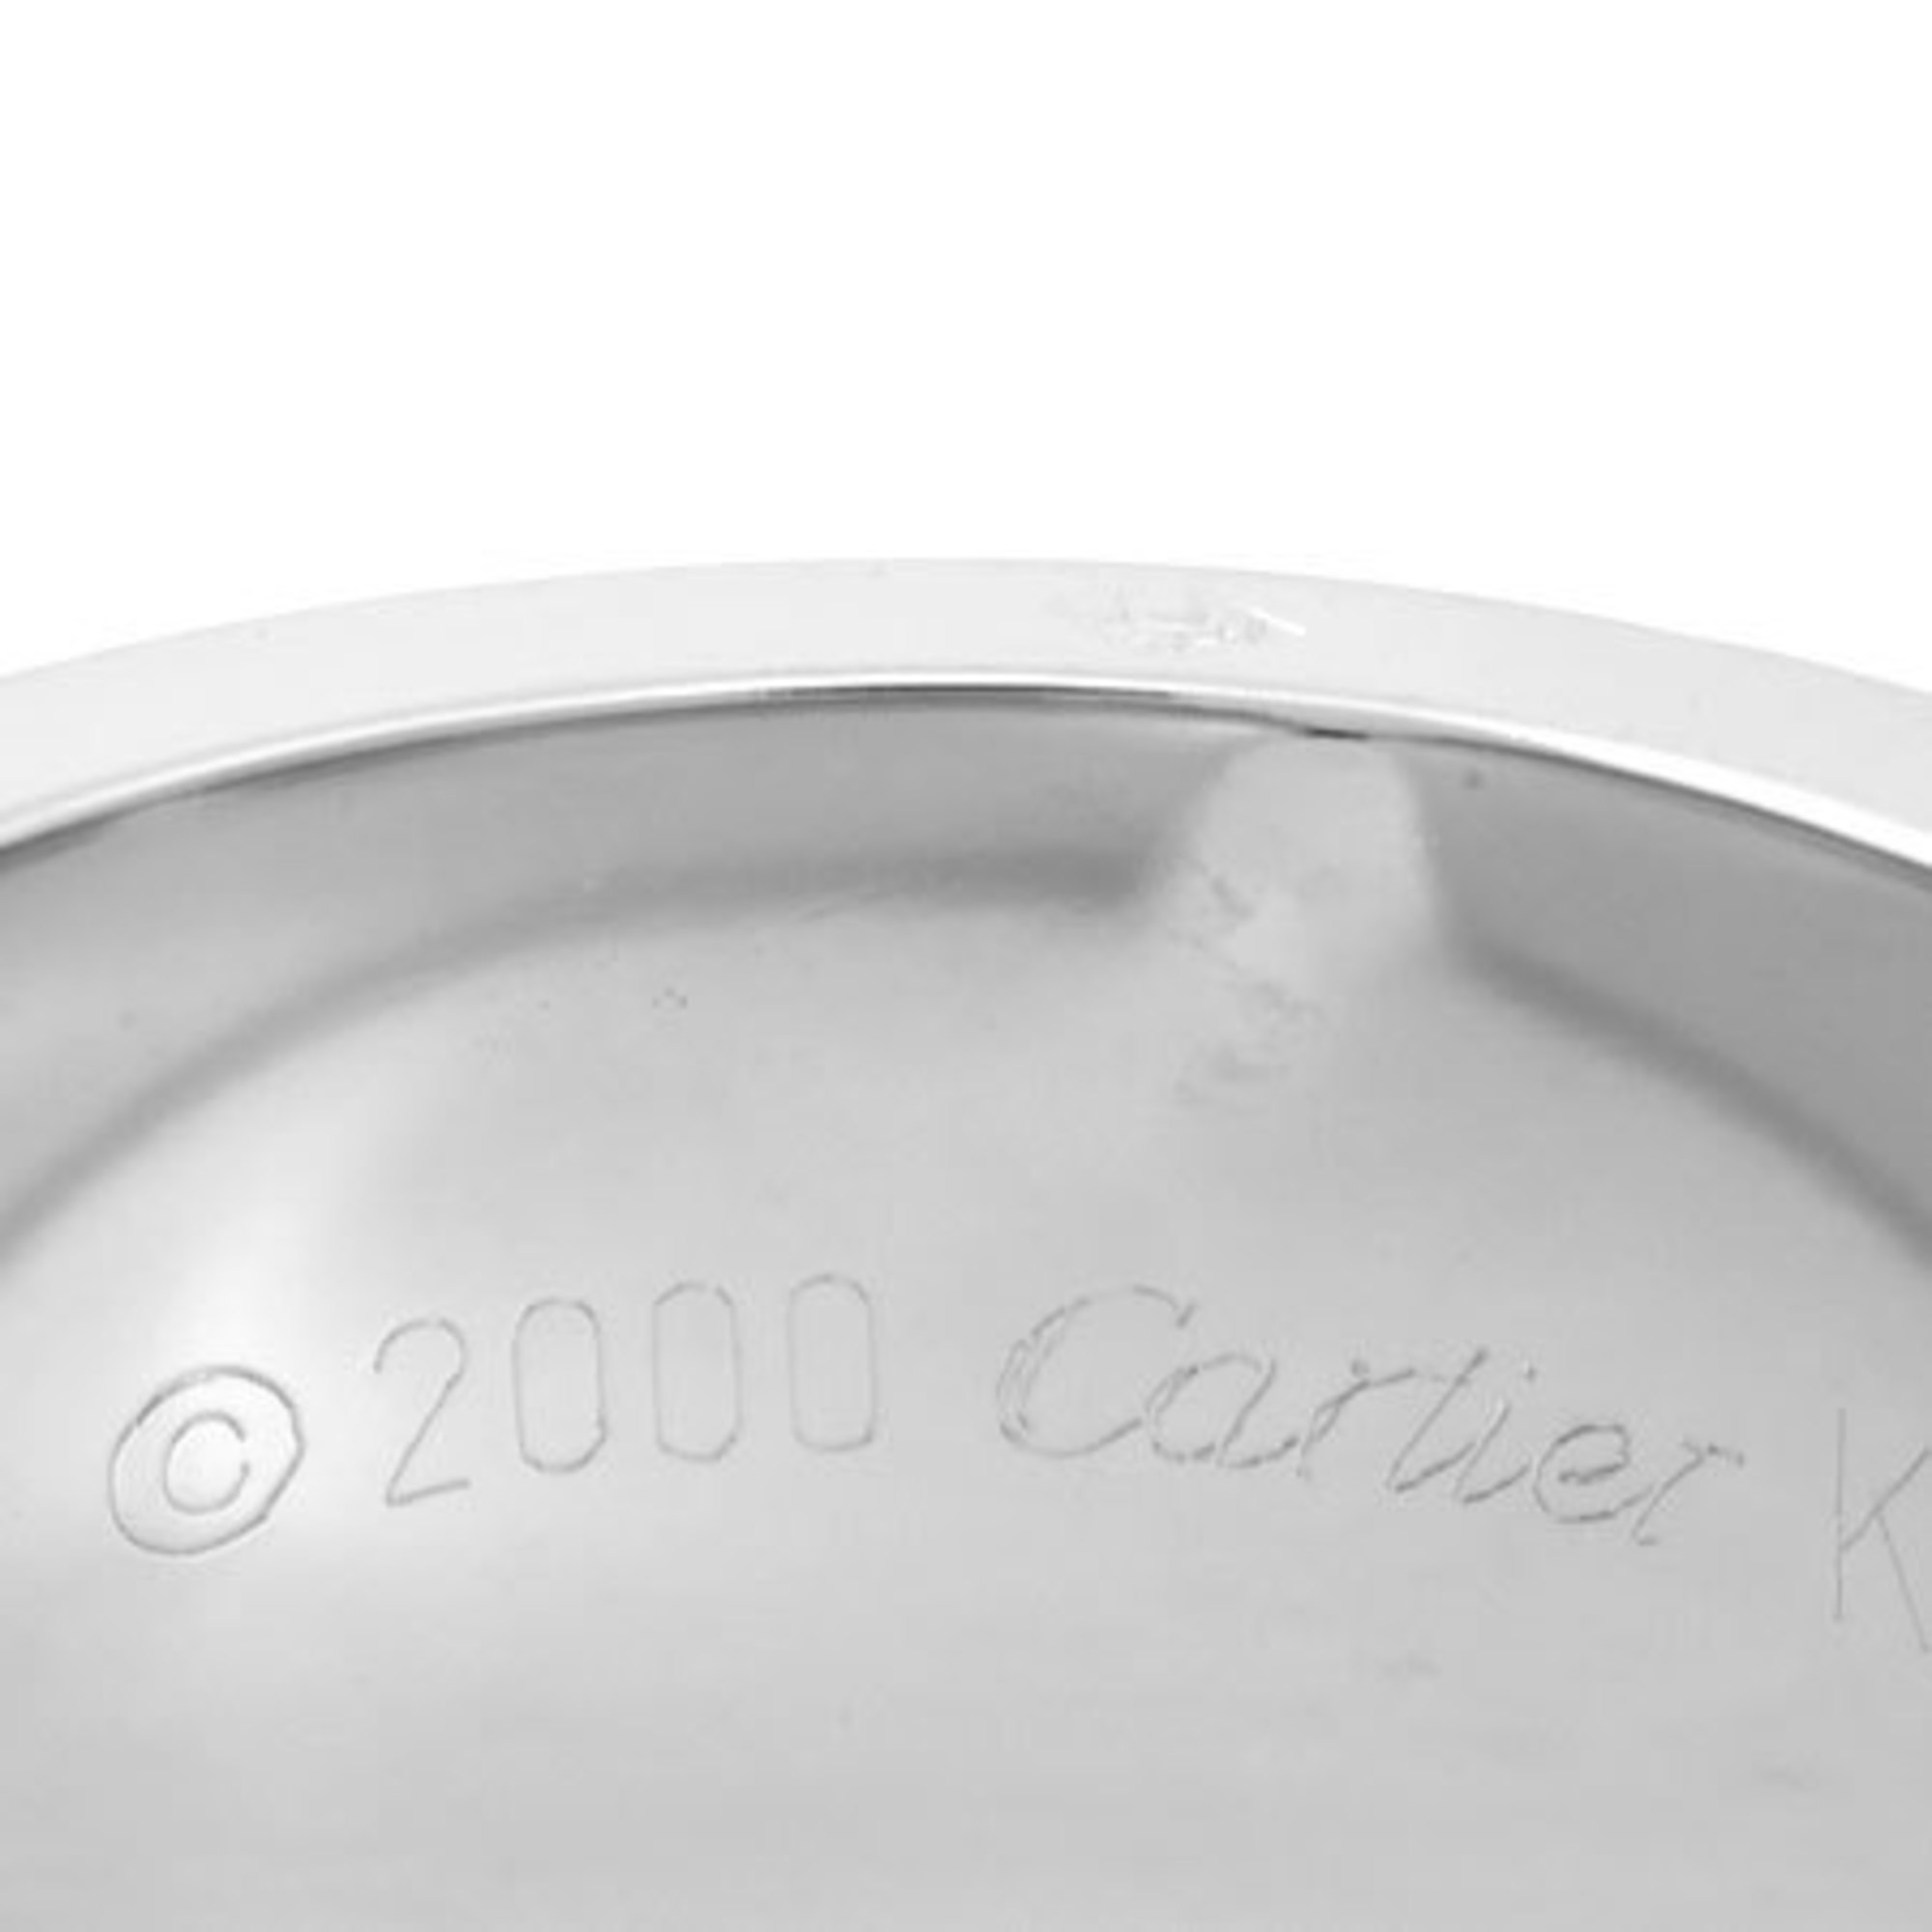 Cartier 2C diamond black lacquer ring LM K18WG #53 B4040700